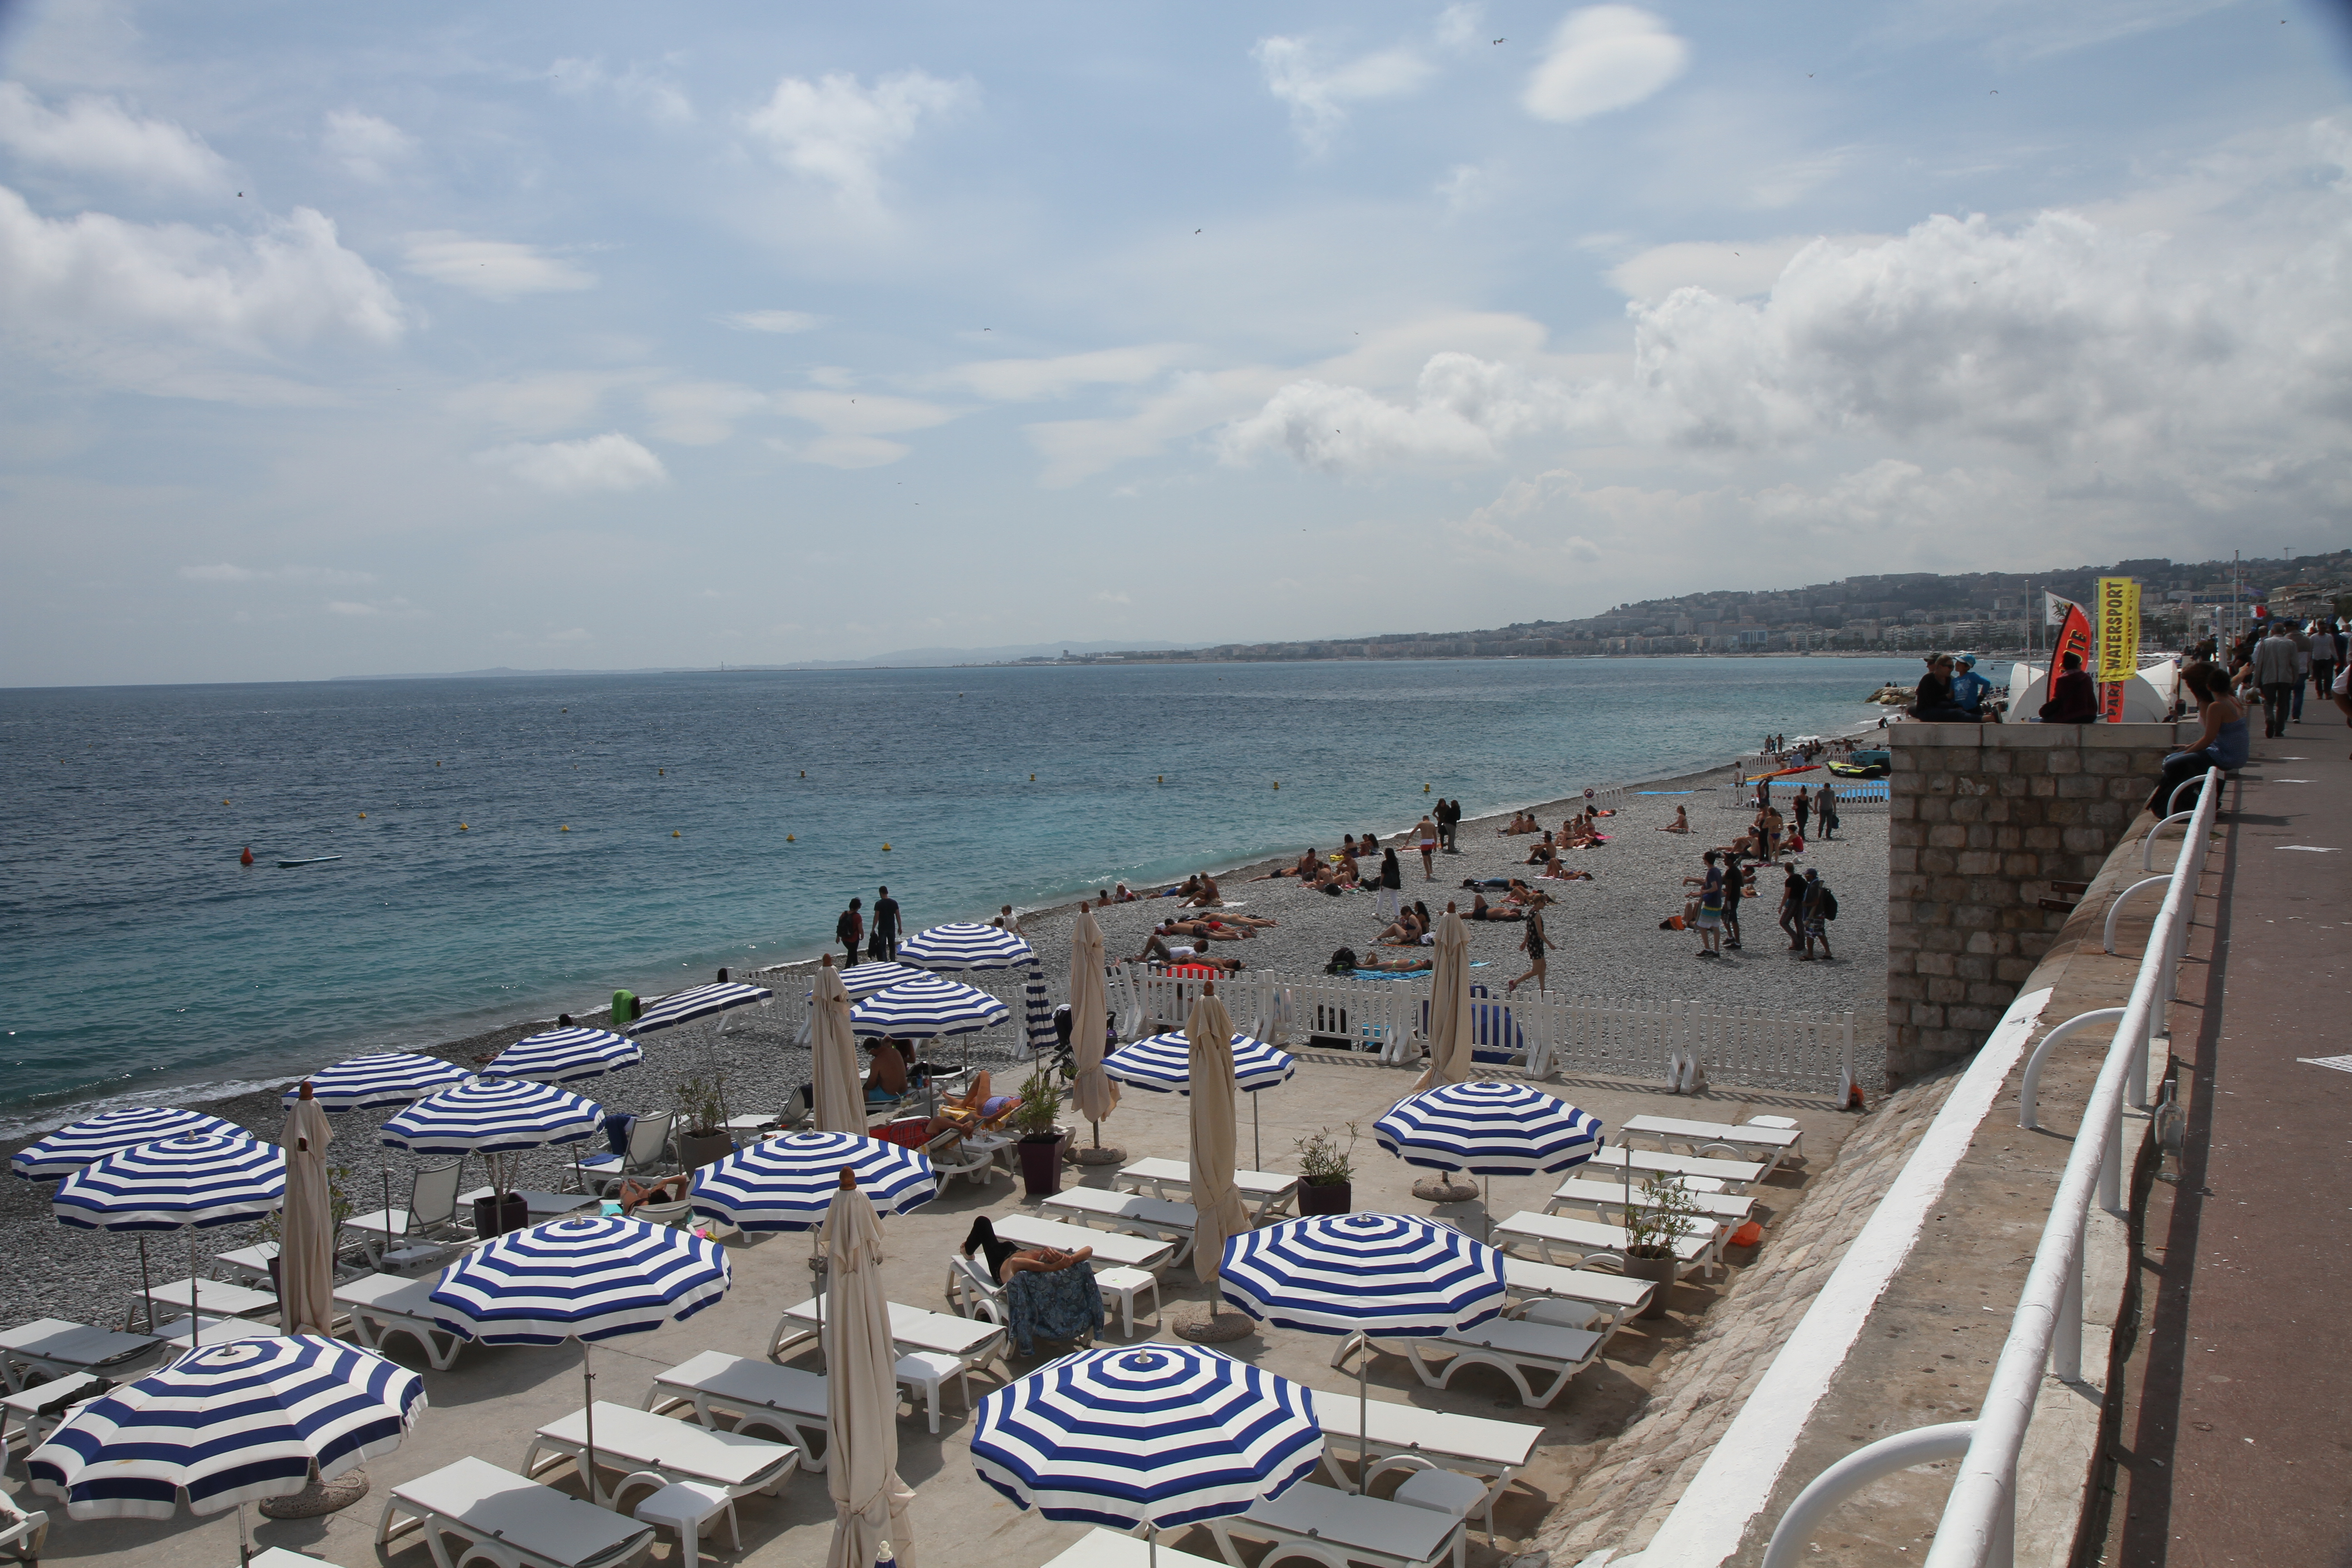 The beach in Nice